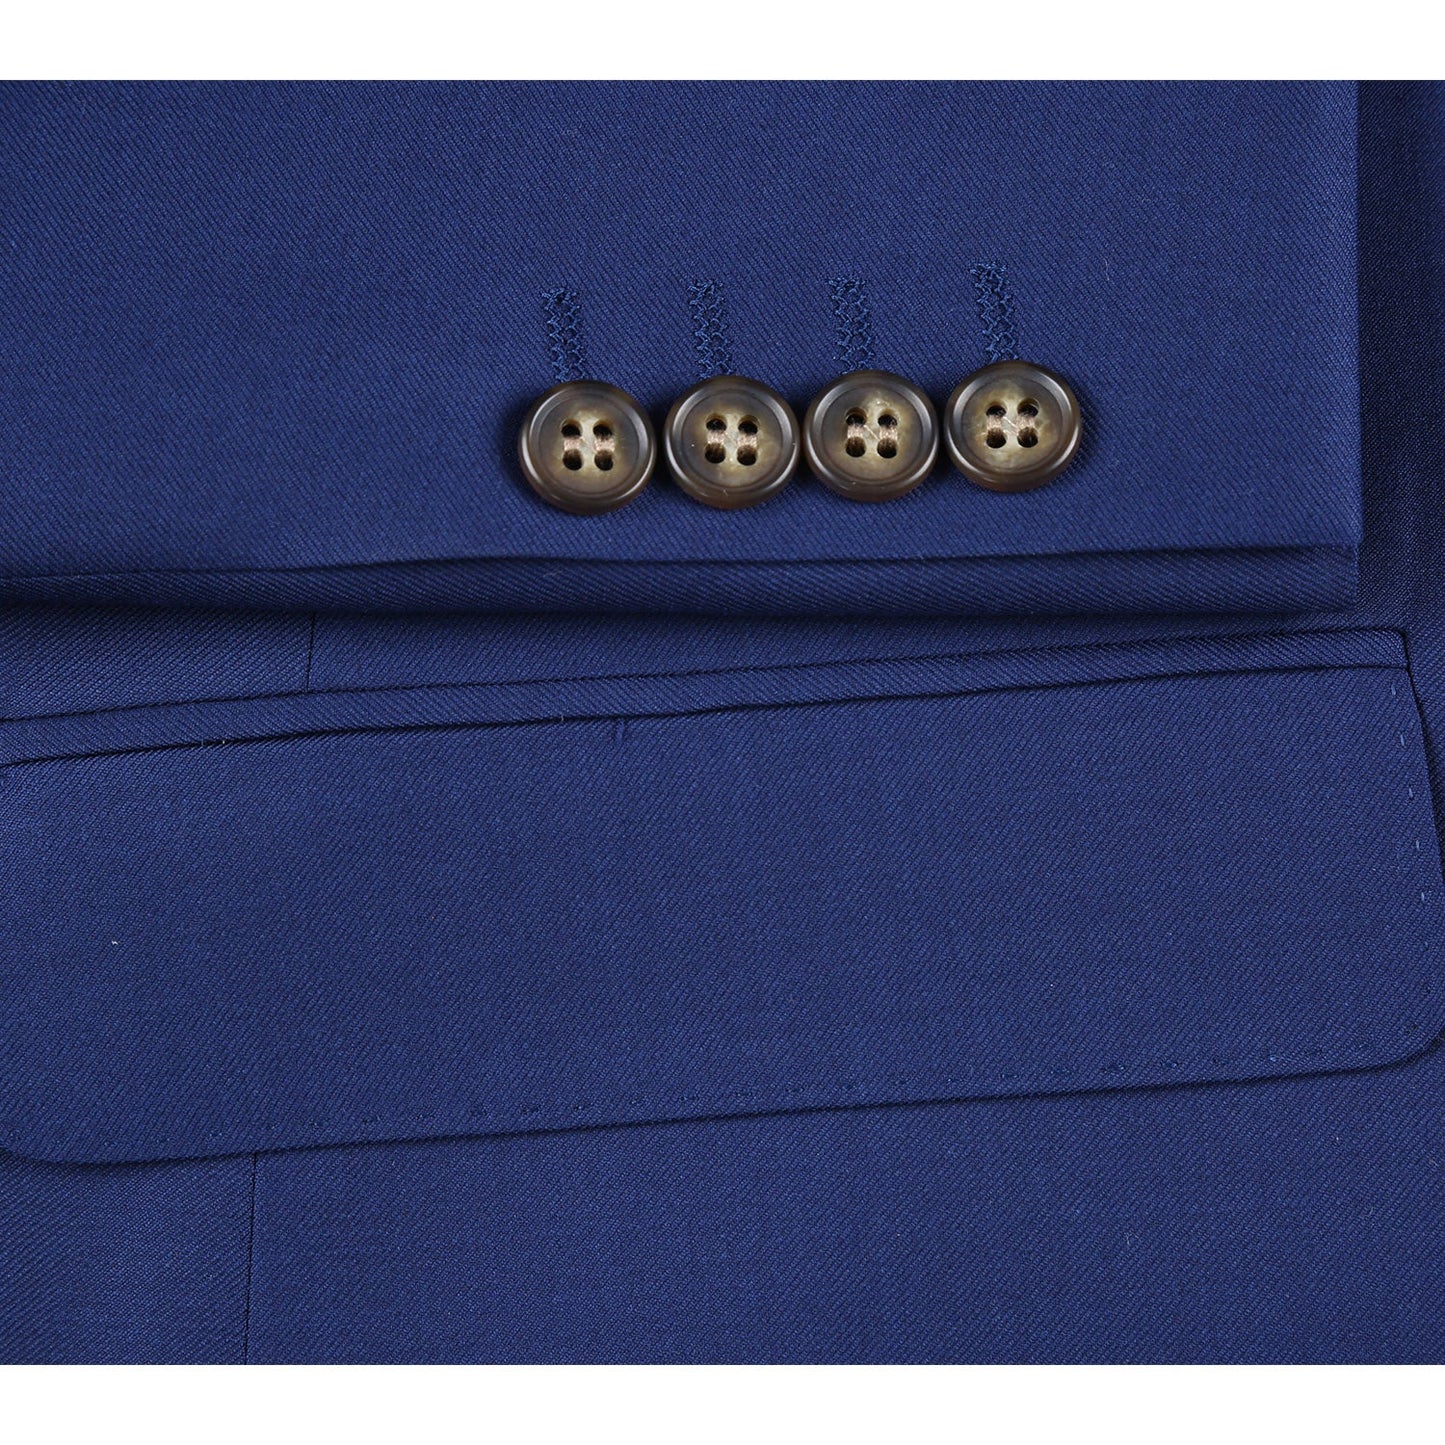 RHC100-19 Men's Blue Half-Canvas Super 150's Wool Suit by Rivelino